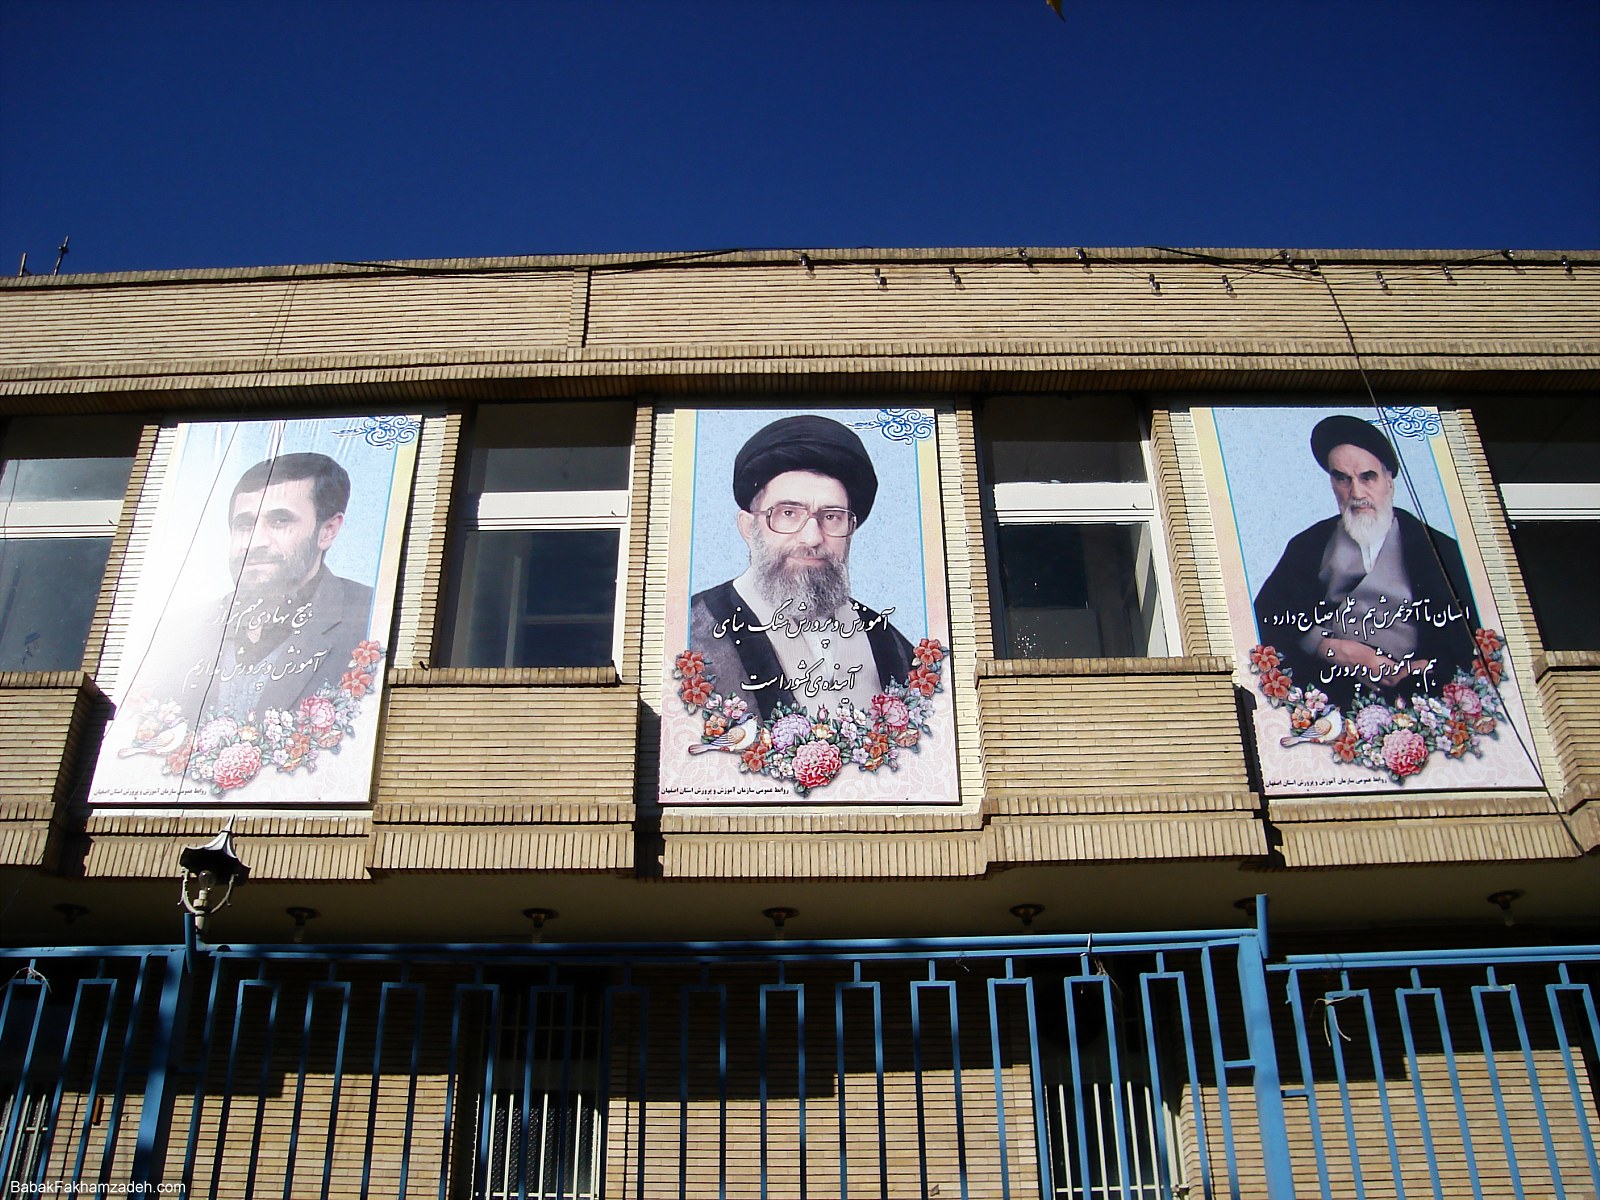 Muur in Estafan, Iran met afbeeldingen van Akhmadinejad, Khamenei, Ruholla Khomeini. Babak Fakhamzadeh/Flickr 